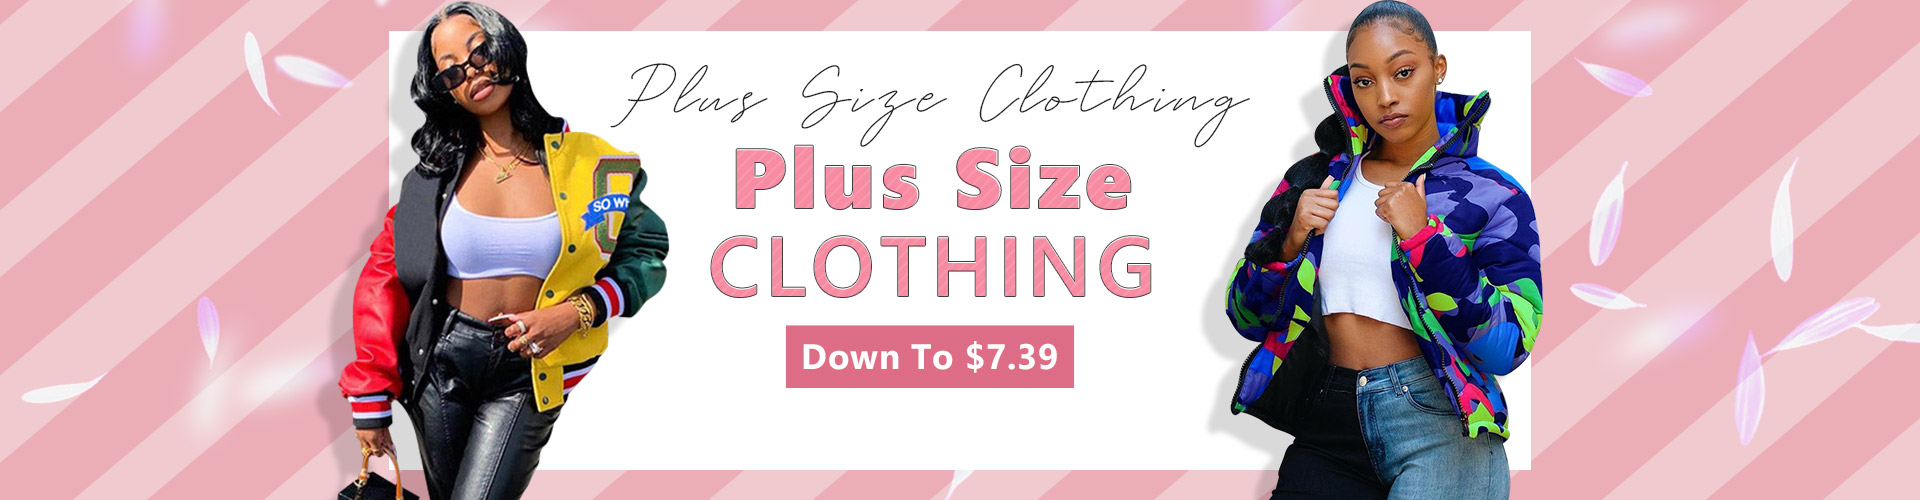 Women's Plus Size Clothing